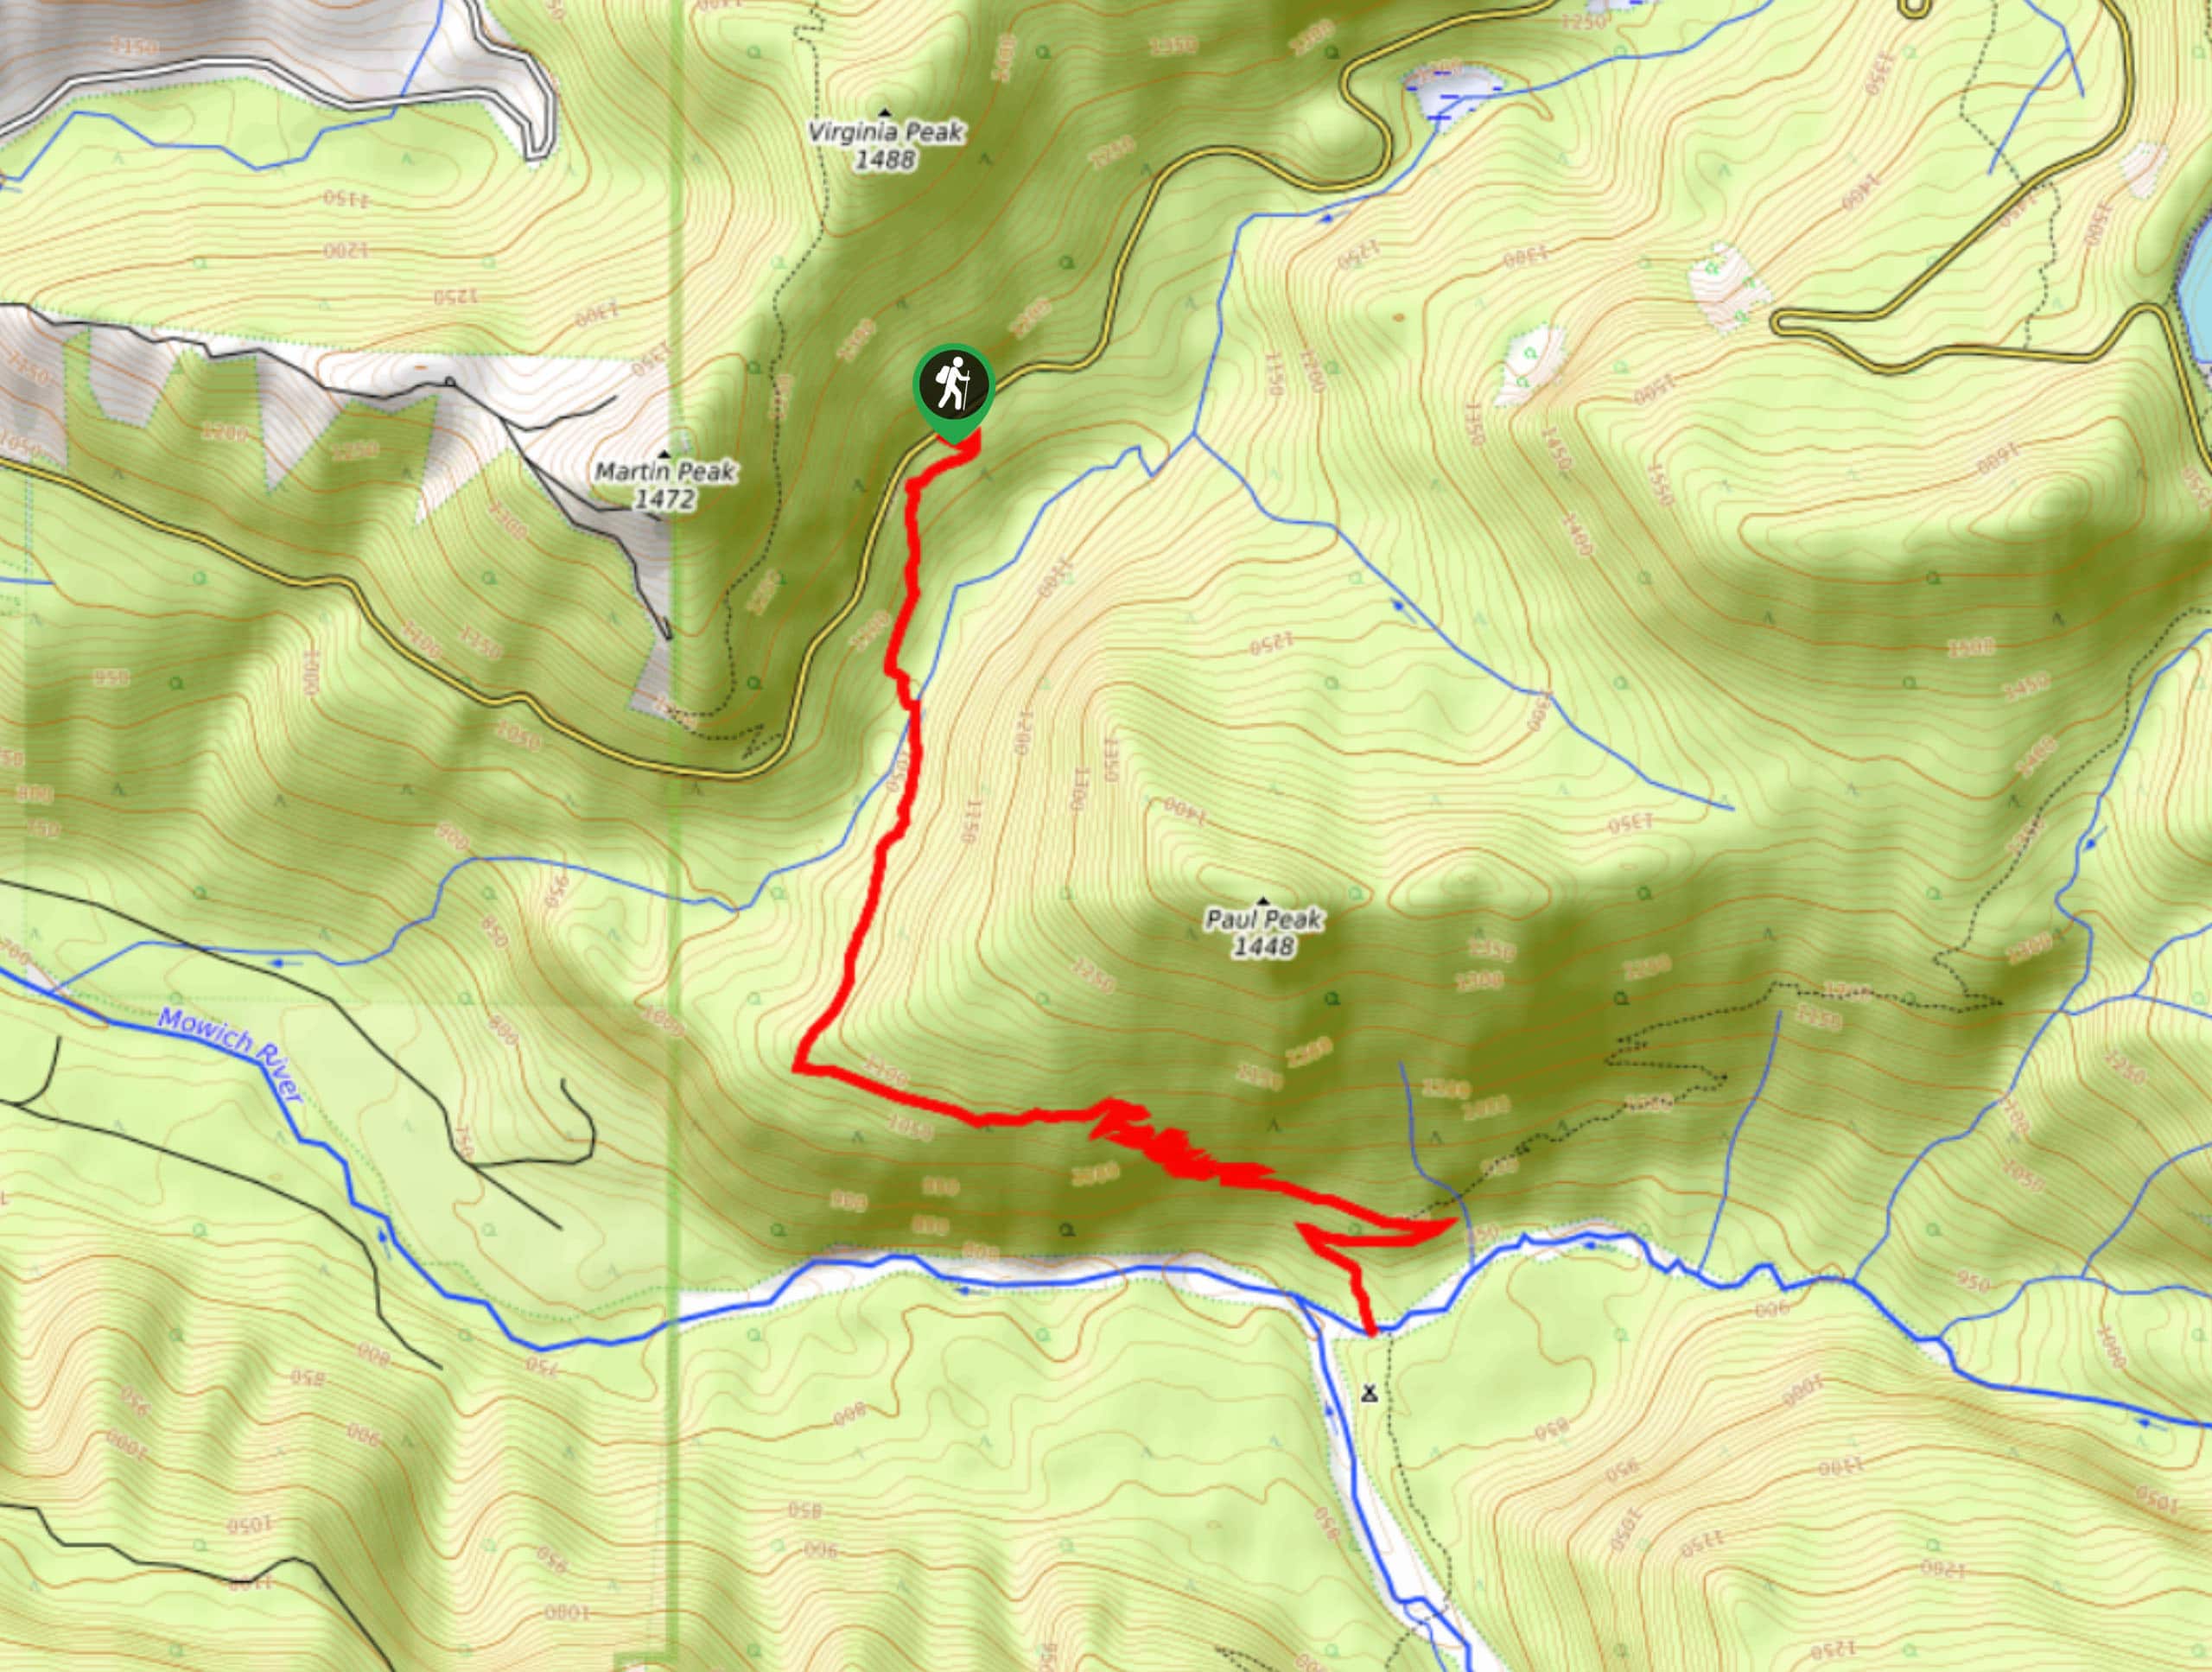 Paul Peak Trail Map